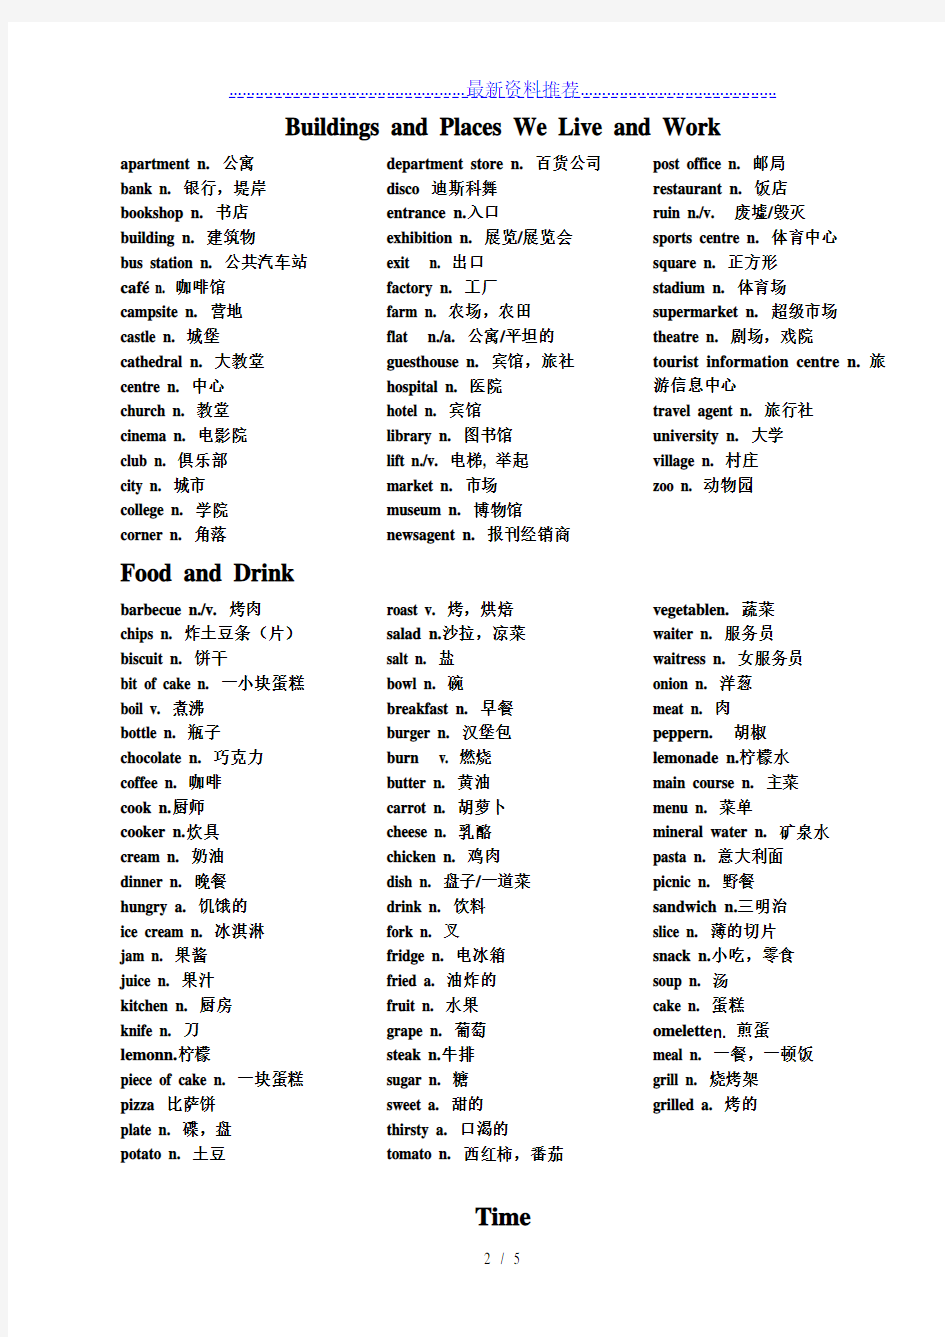 剑桥等级英语KET分类词汇表